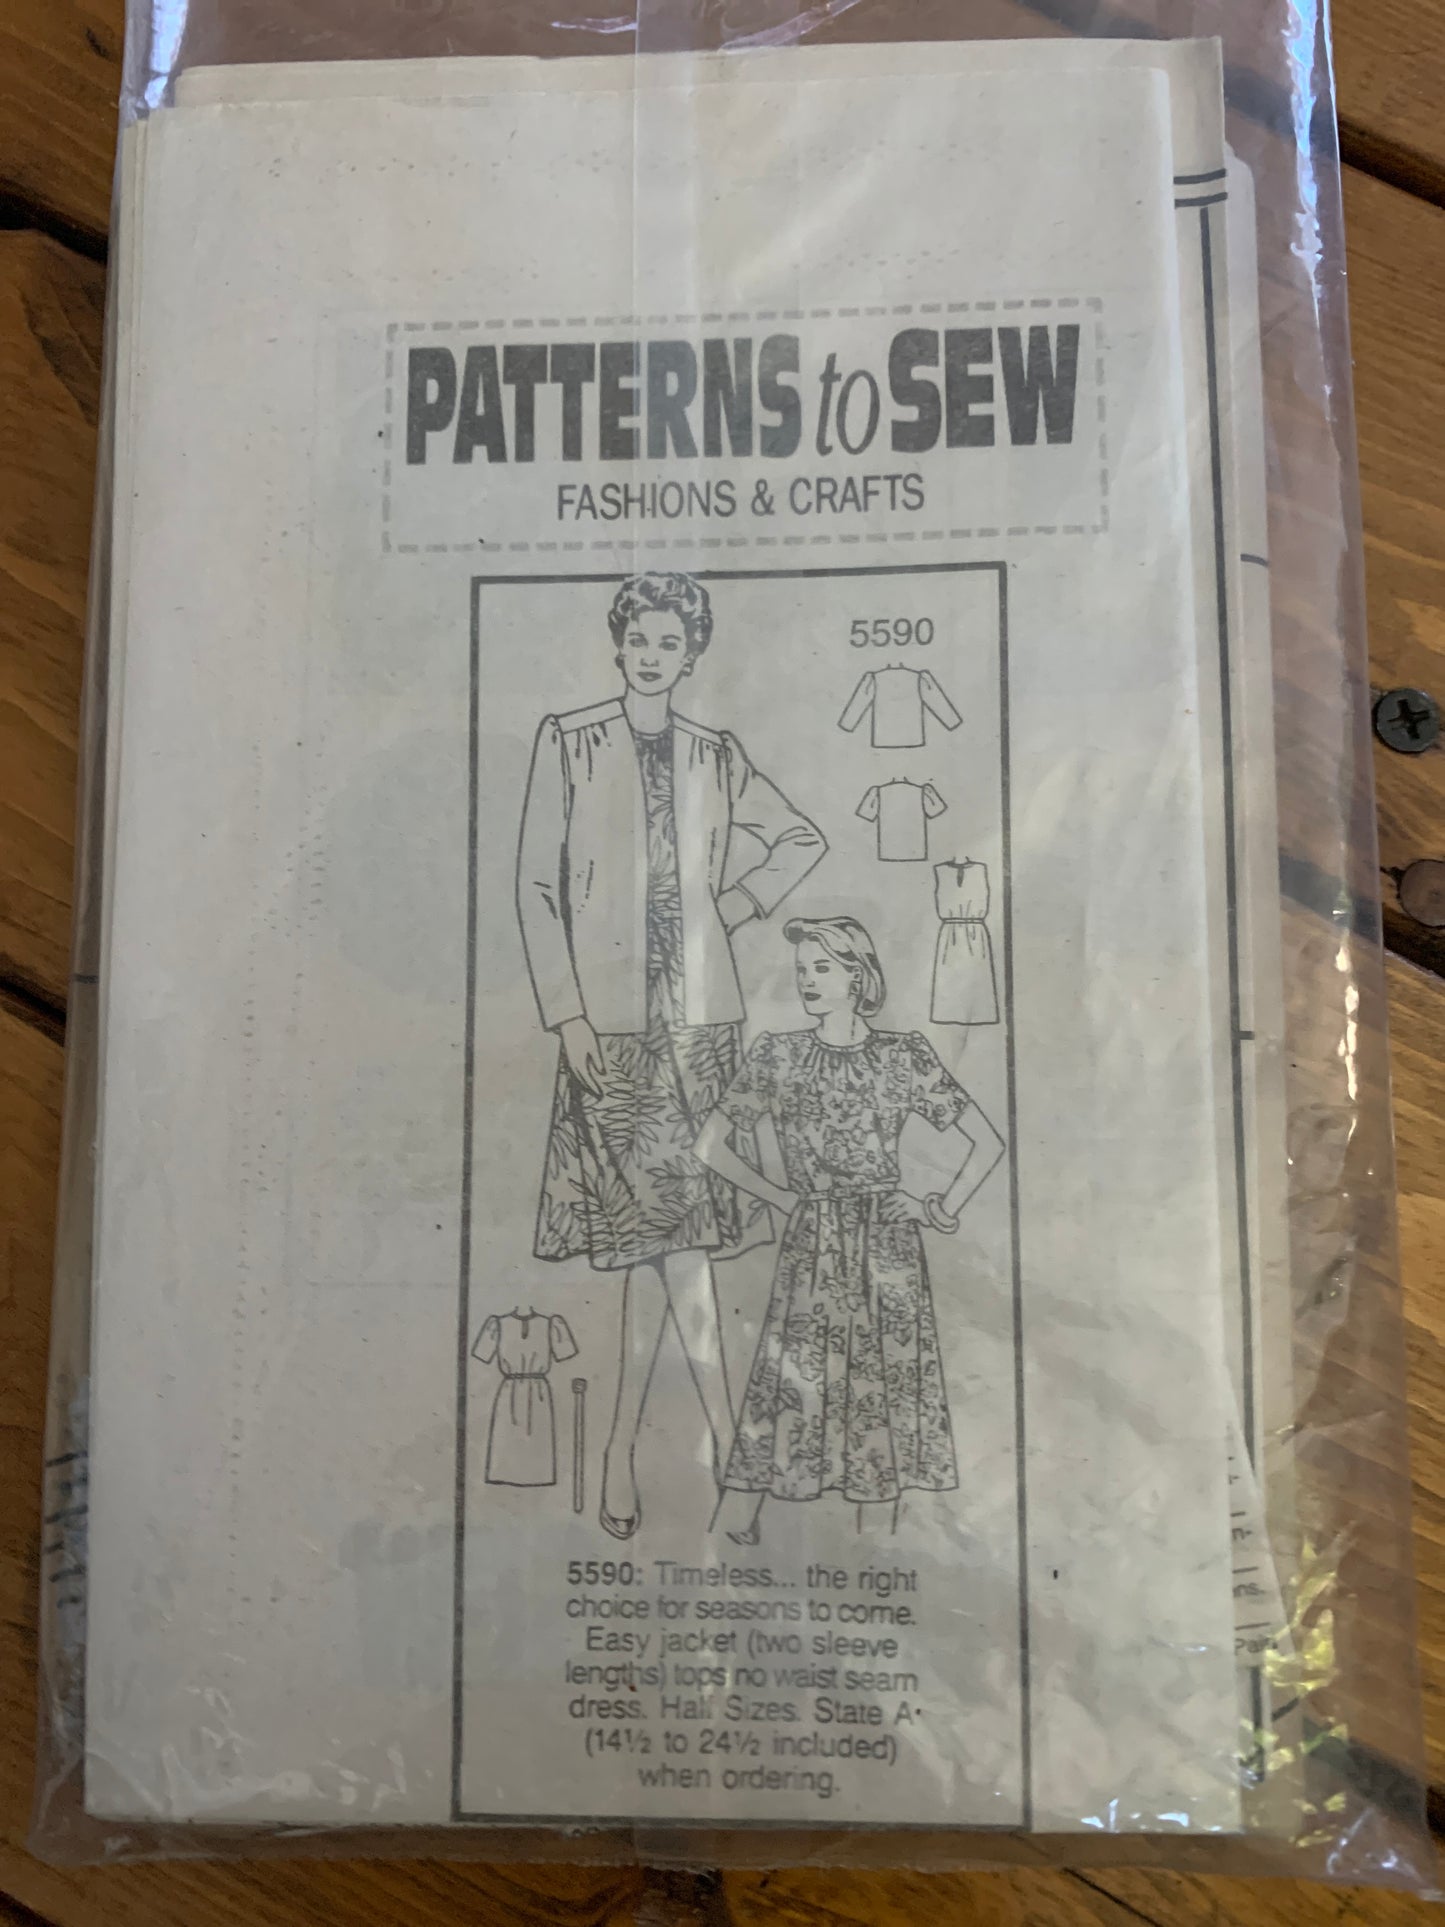 Patterns to Sew Fashion & Crafts